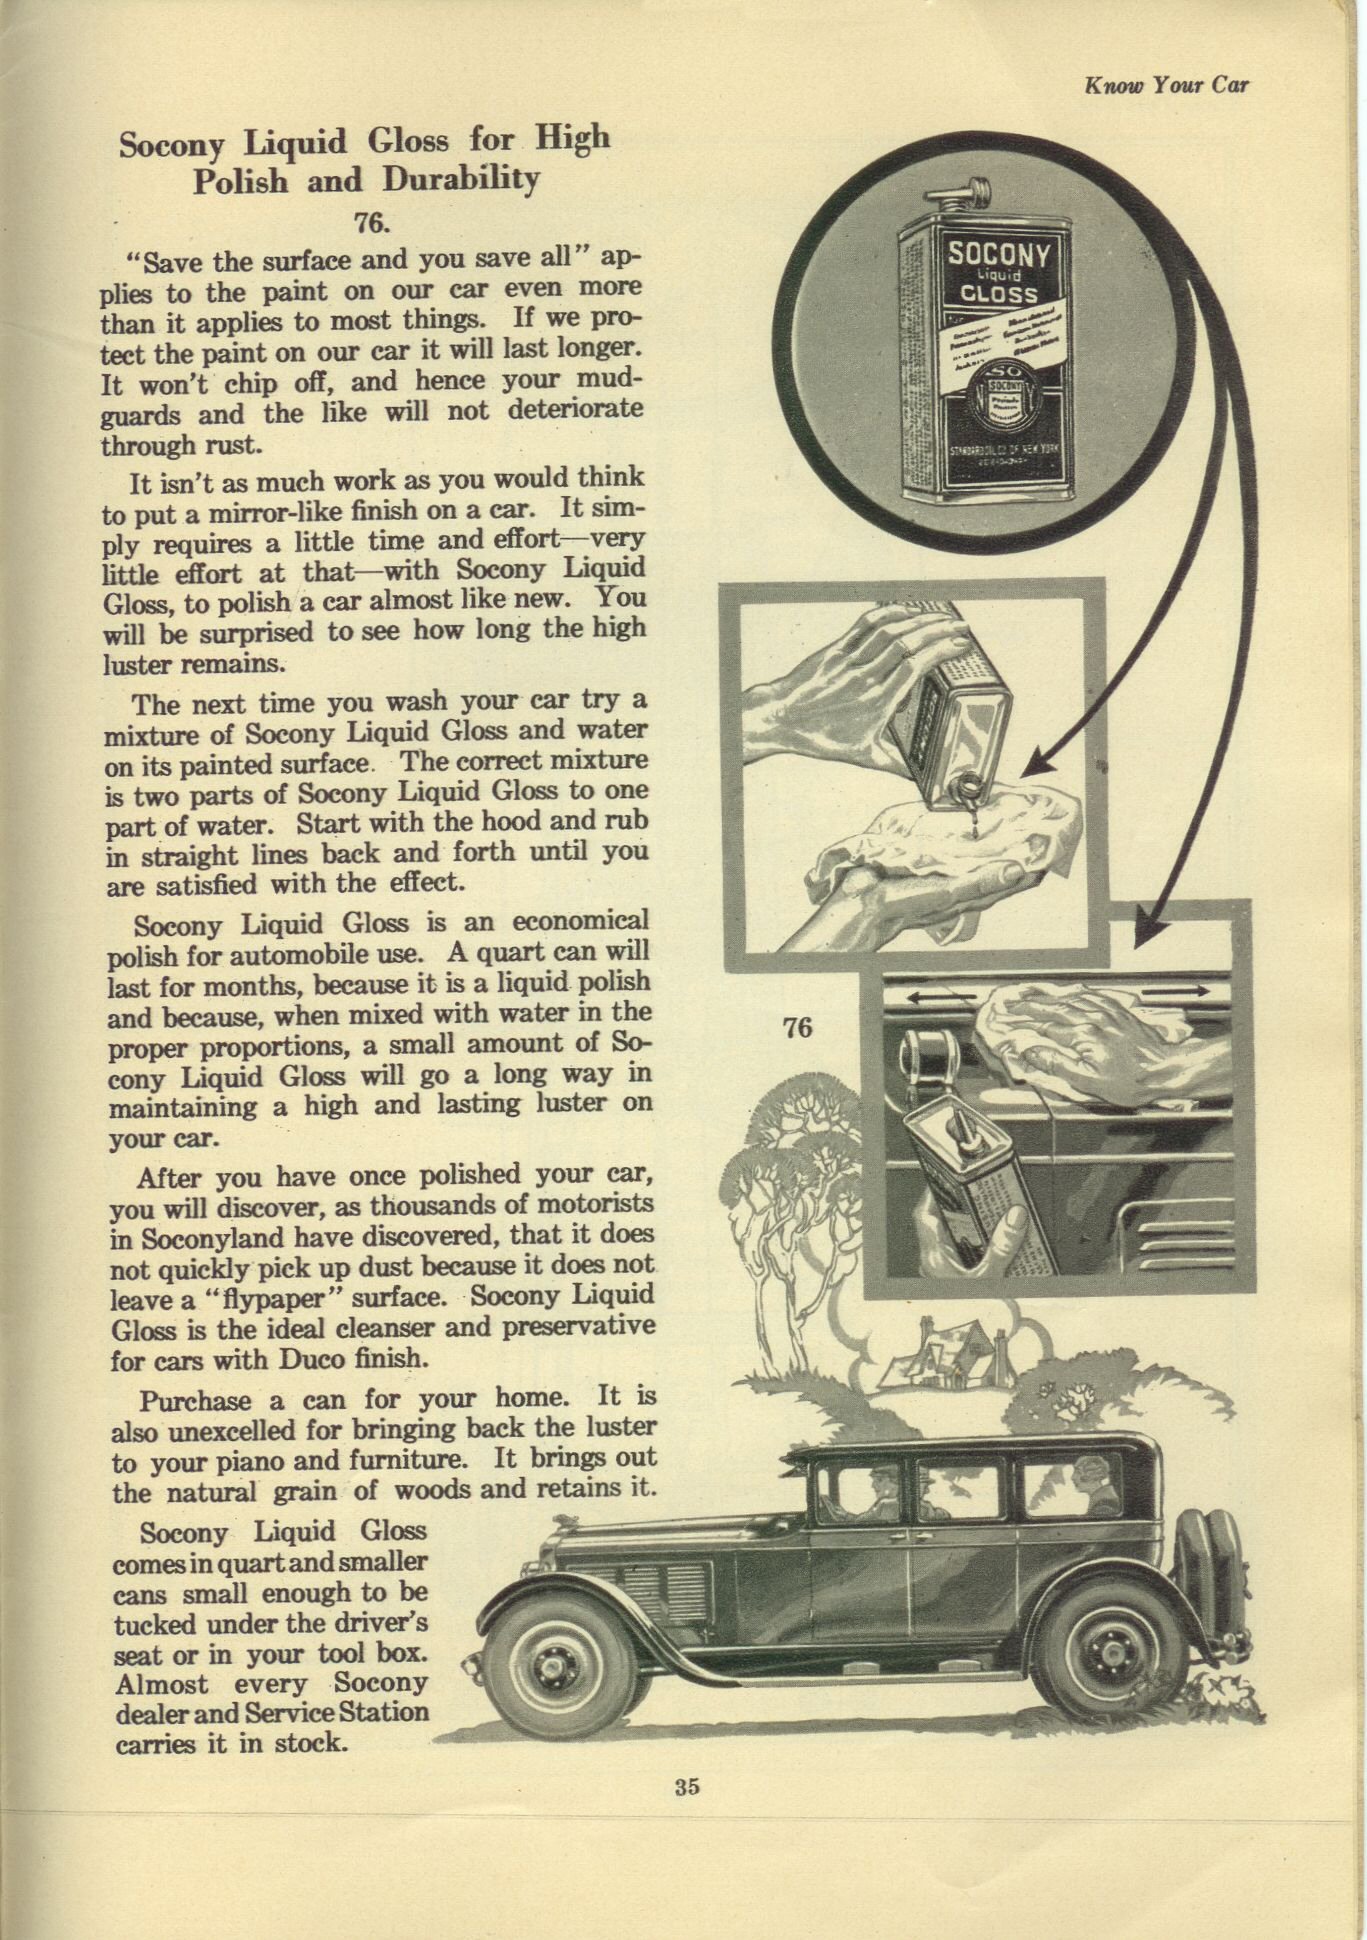 1928 Know Your Car Handbook Page 10